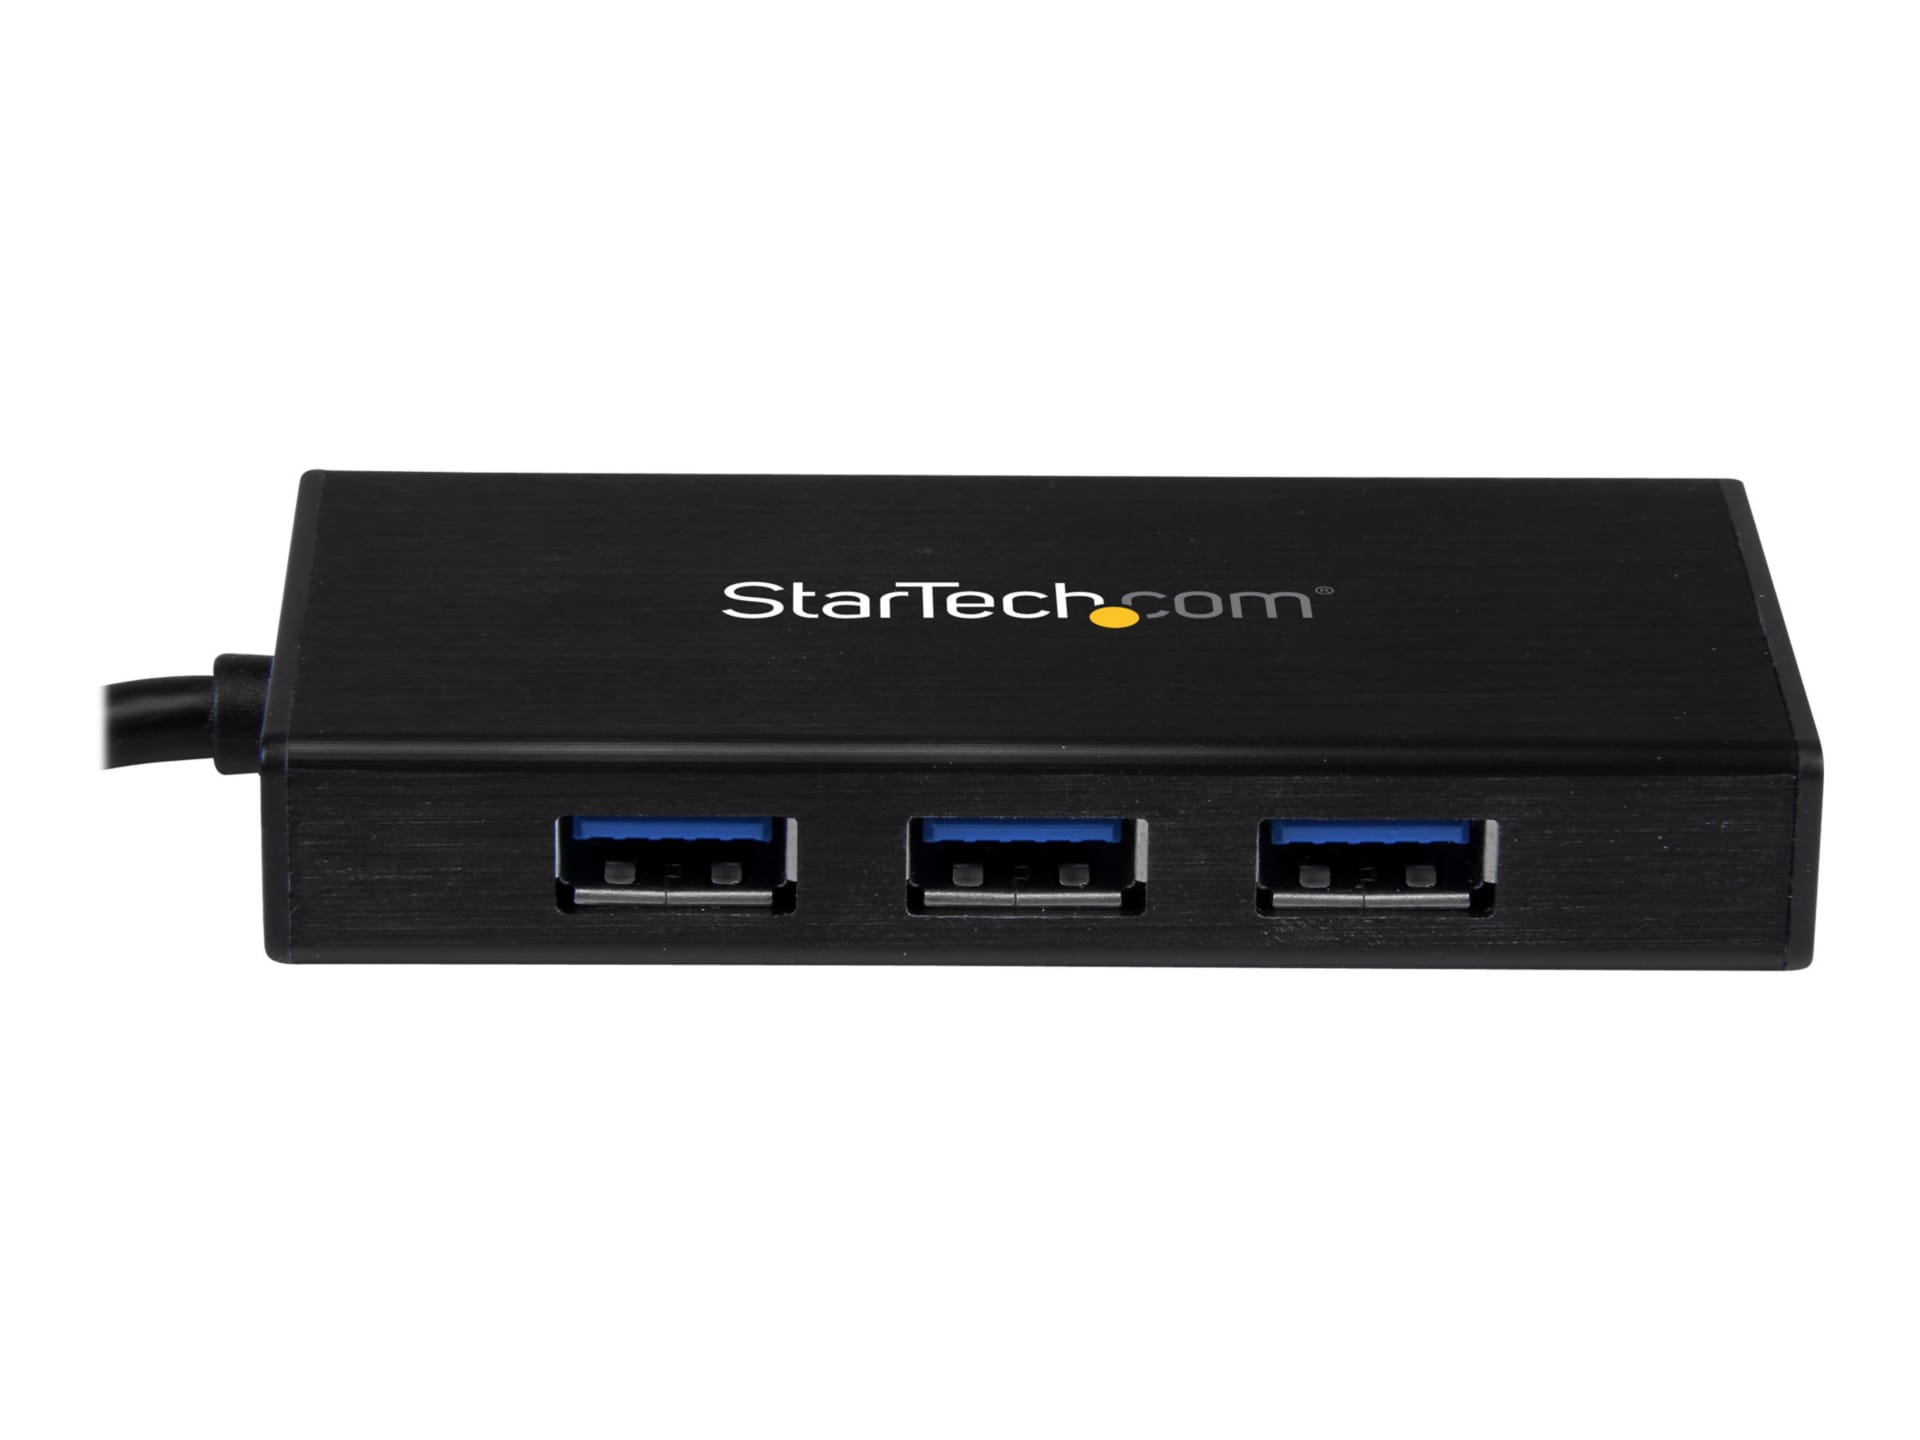 StarTech.com 3 Port USB 3.0 Hub with Gigabit Ethernet Adapter NIC, Portable - ST3300GU3B - USB Hubs -